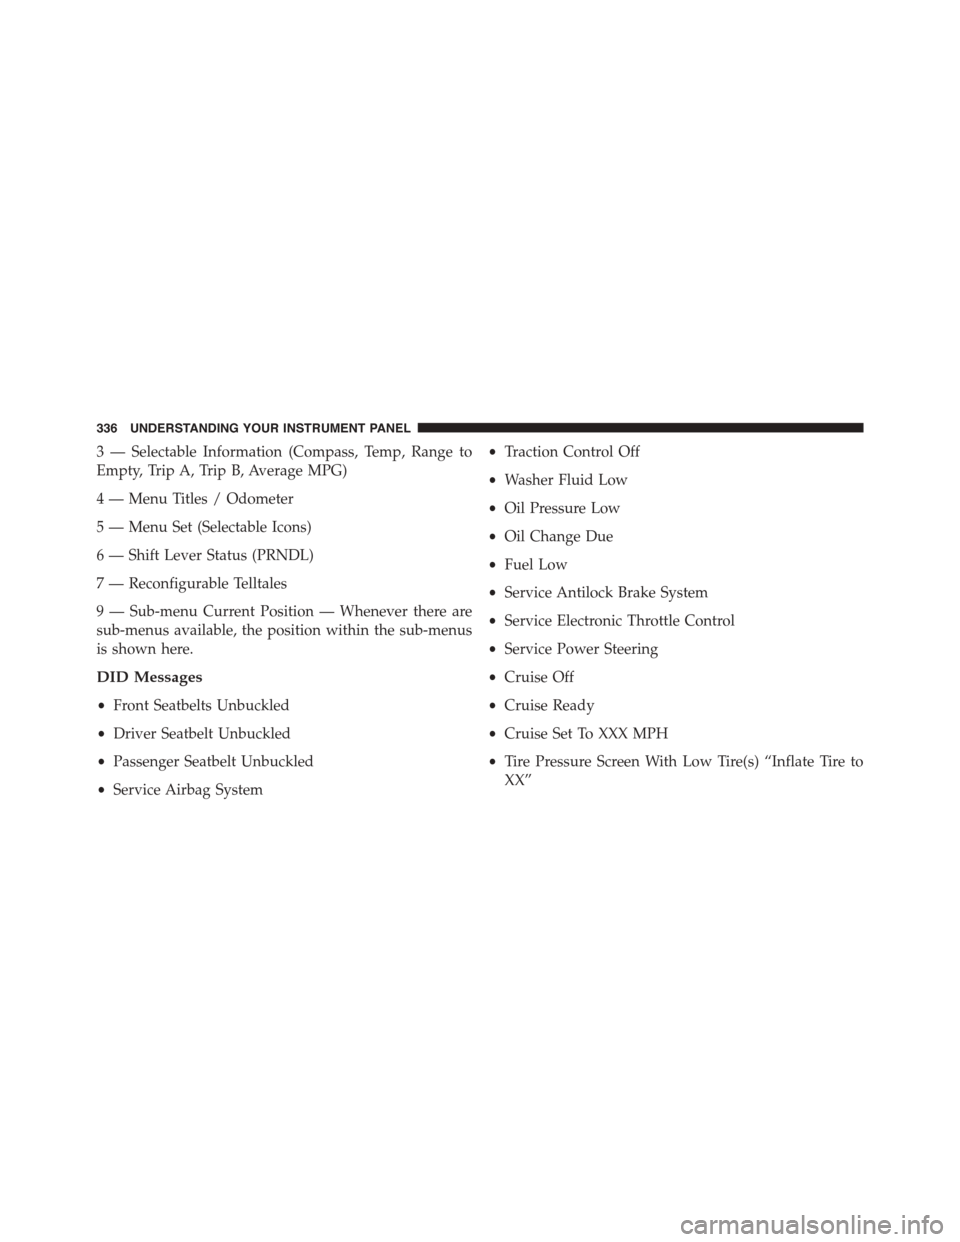 DODGE DART 2015 PF / 1.G Owners Manual 3 — Selectable Information (Compass, Temp, Range to
Empty, Trip A, Trip B, Average MPG)
4 — Menu Titles / Odometer
5 — Menu Set (Selectable Icons)
6 — Shift Lever Status (PRNDL)
7 — Reconfig